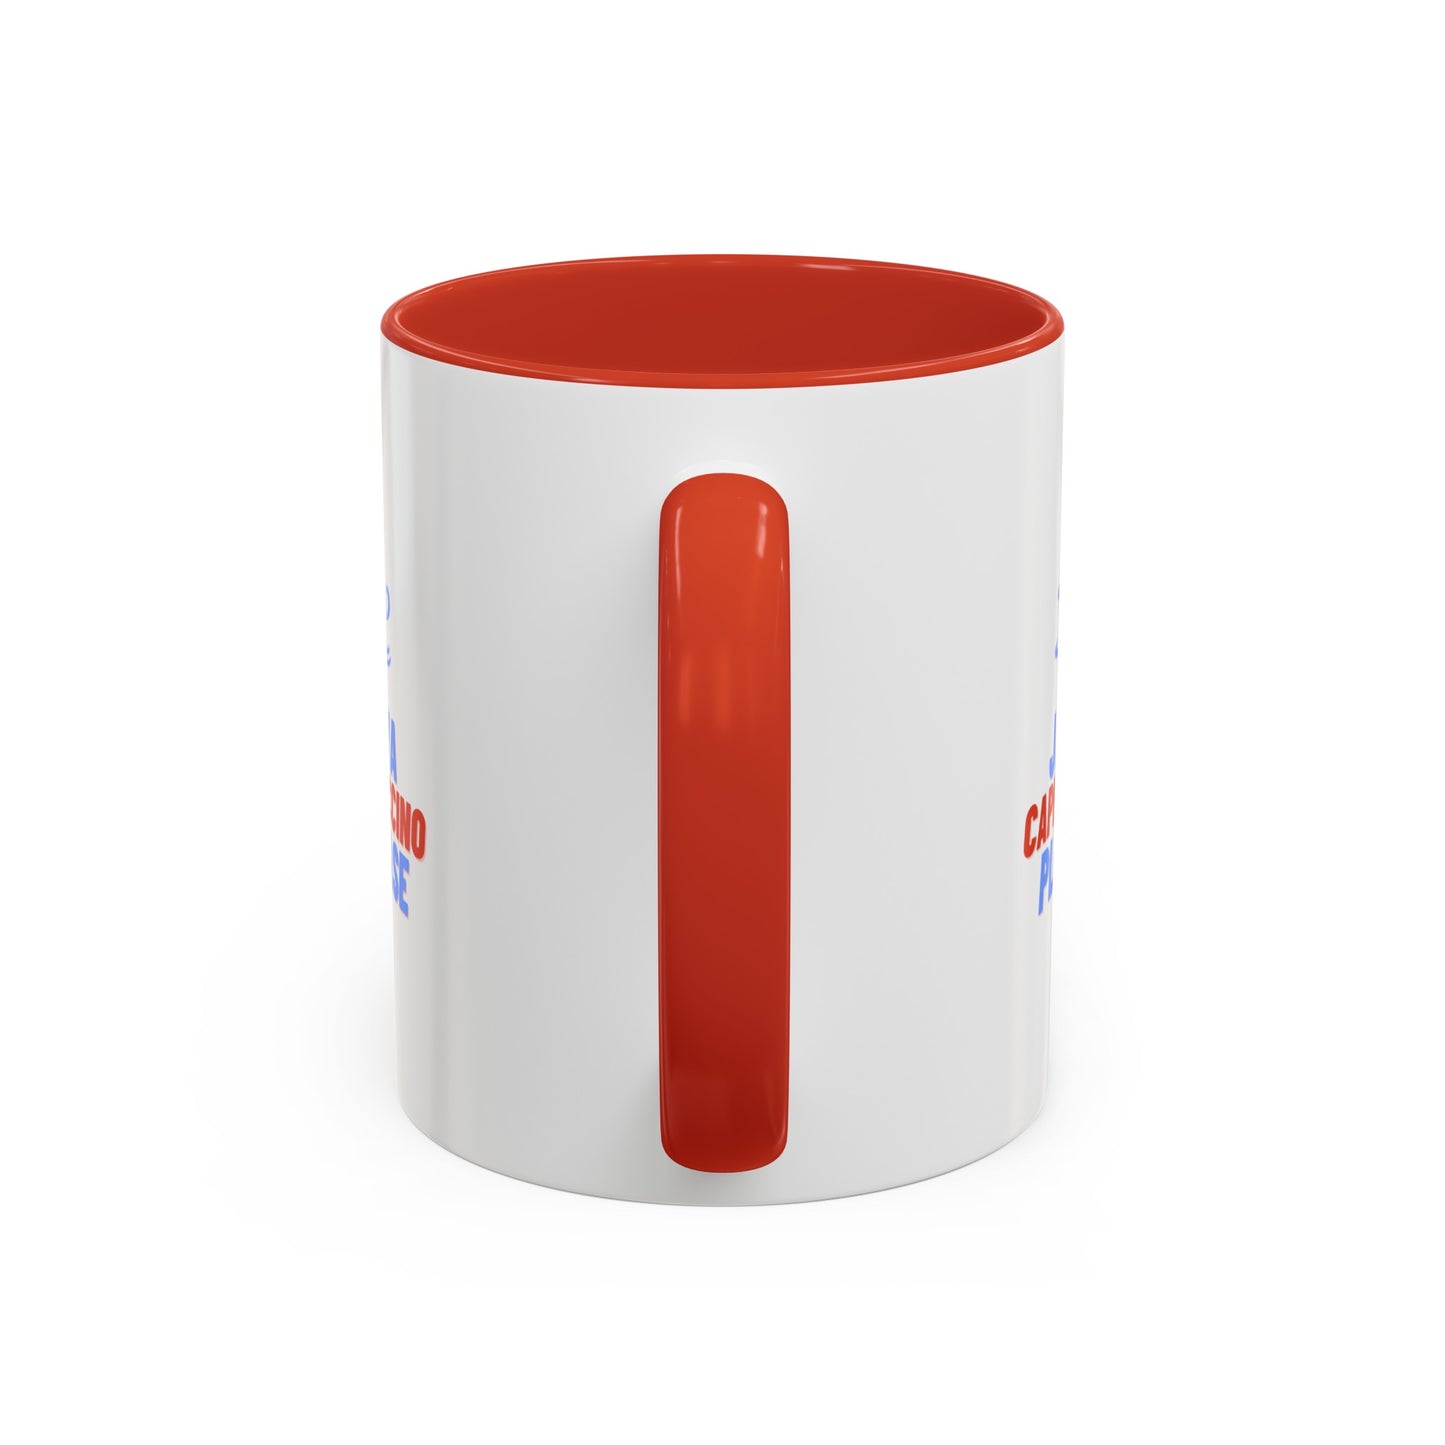 Geek - Programmer mug, JAVA Cappuccino mug, two toned mug